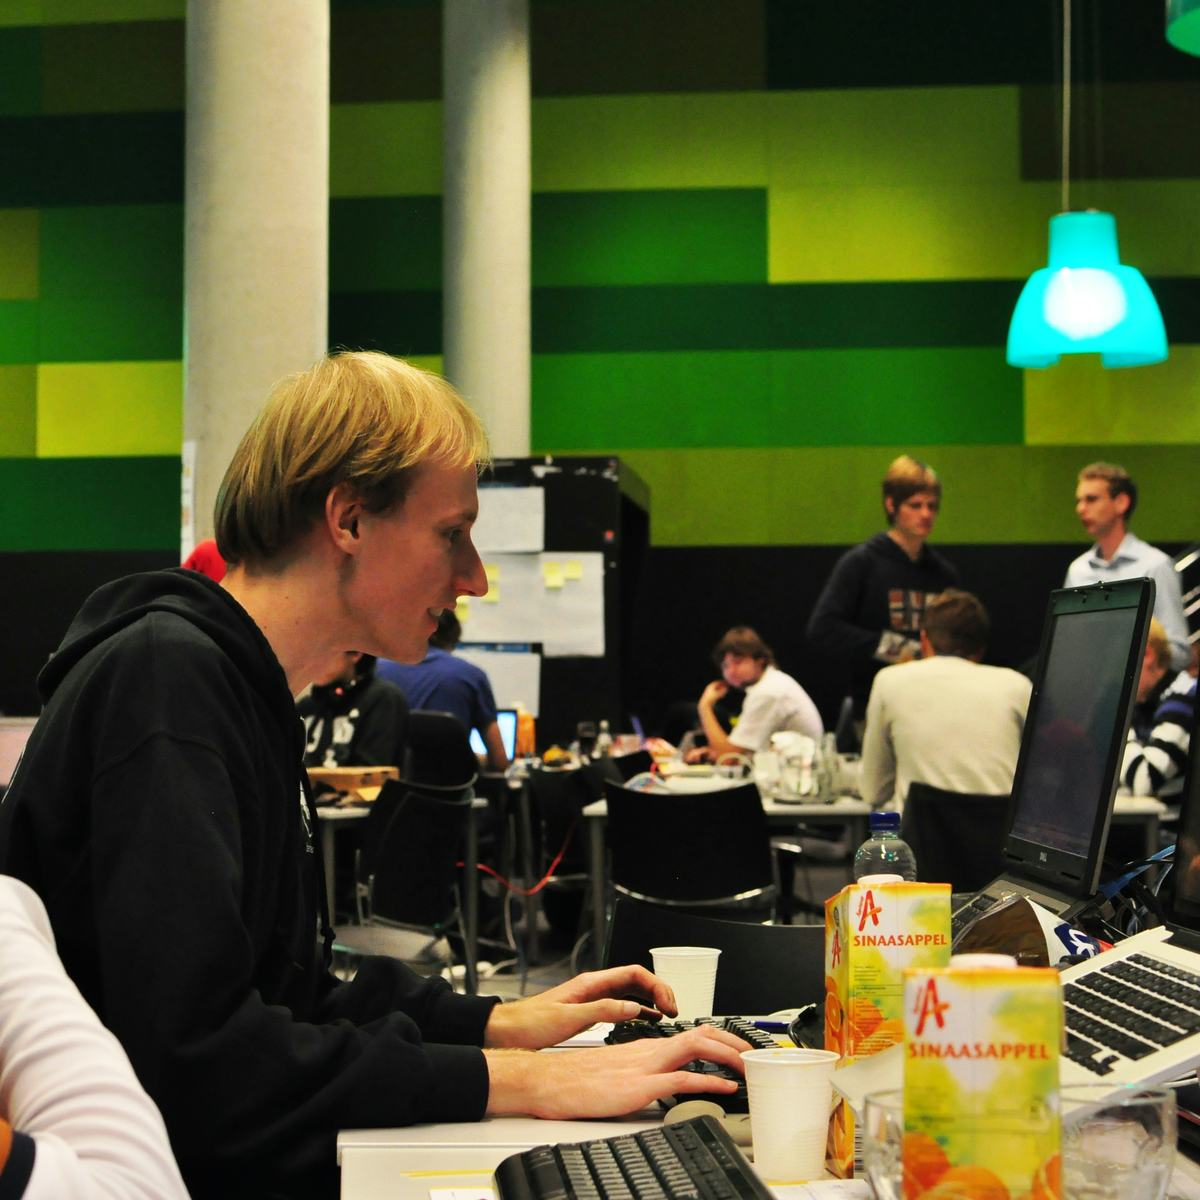 Supply Chain Hackathon levert bruikbare apps op